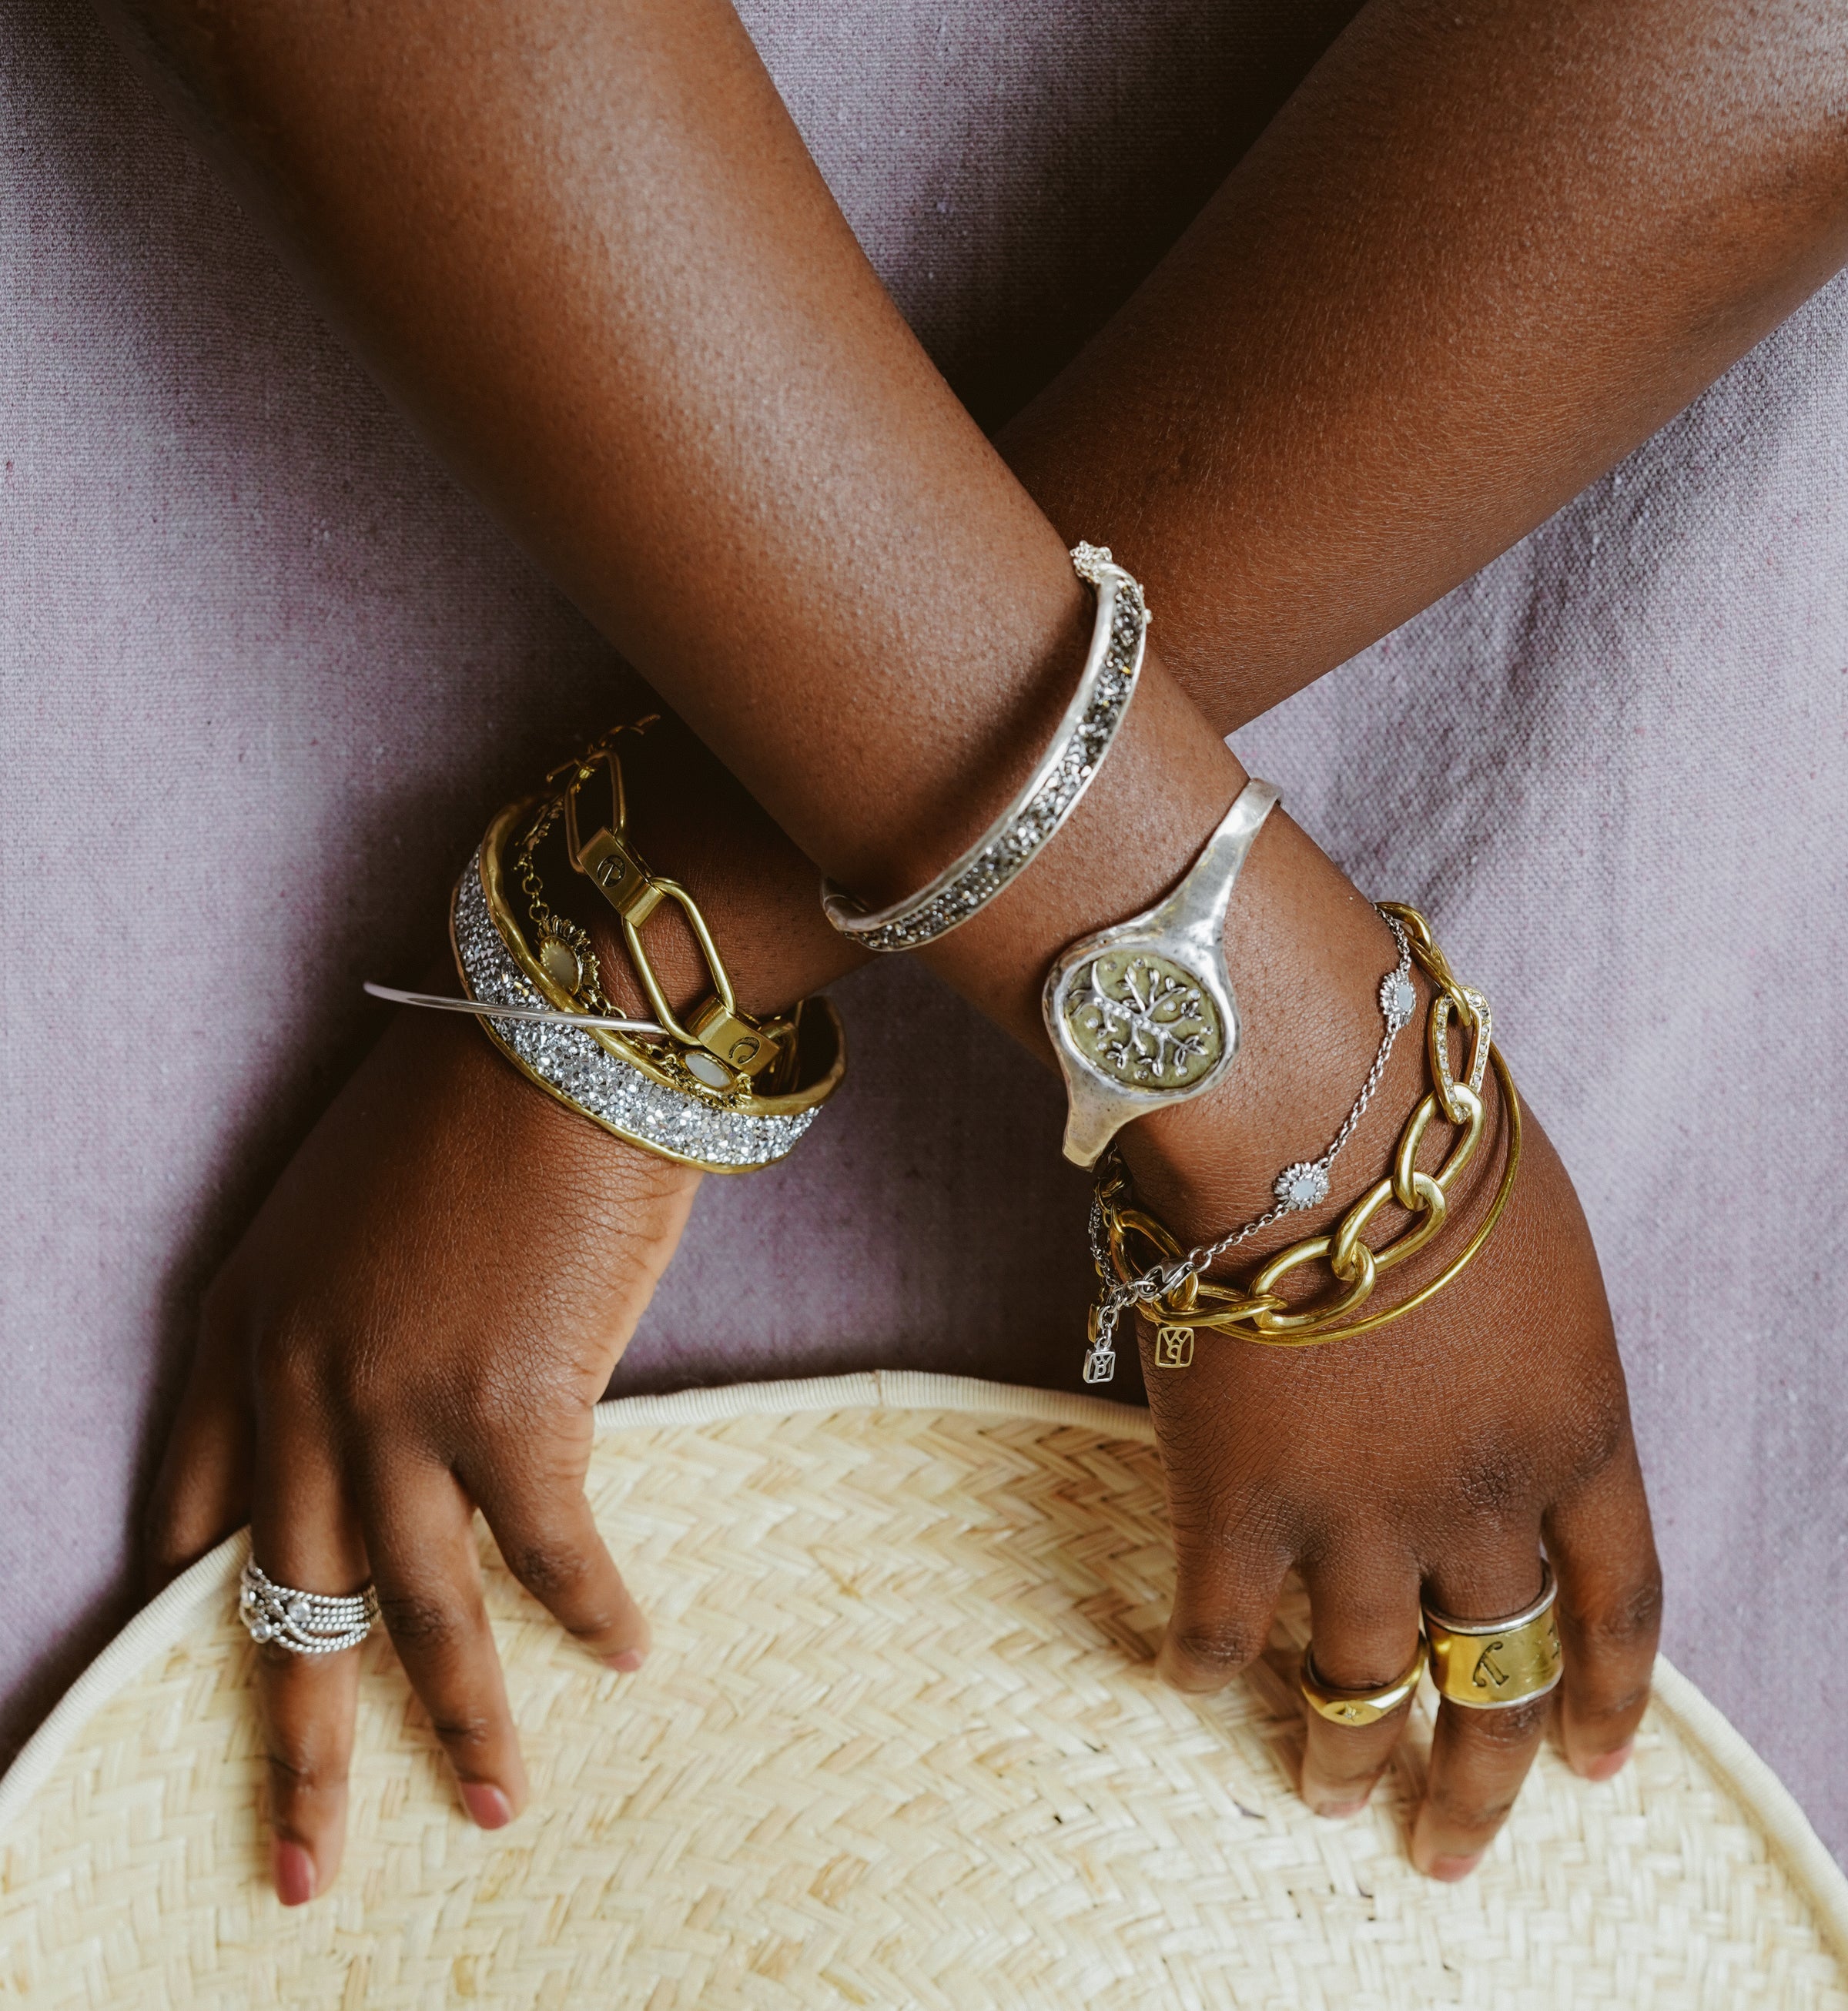 How To Wear Bangle Bracelets: Fit, Sizing & Styling